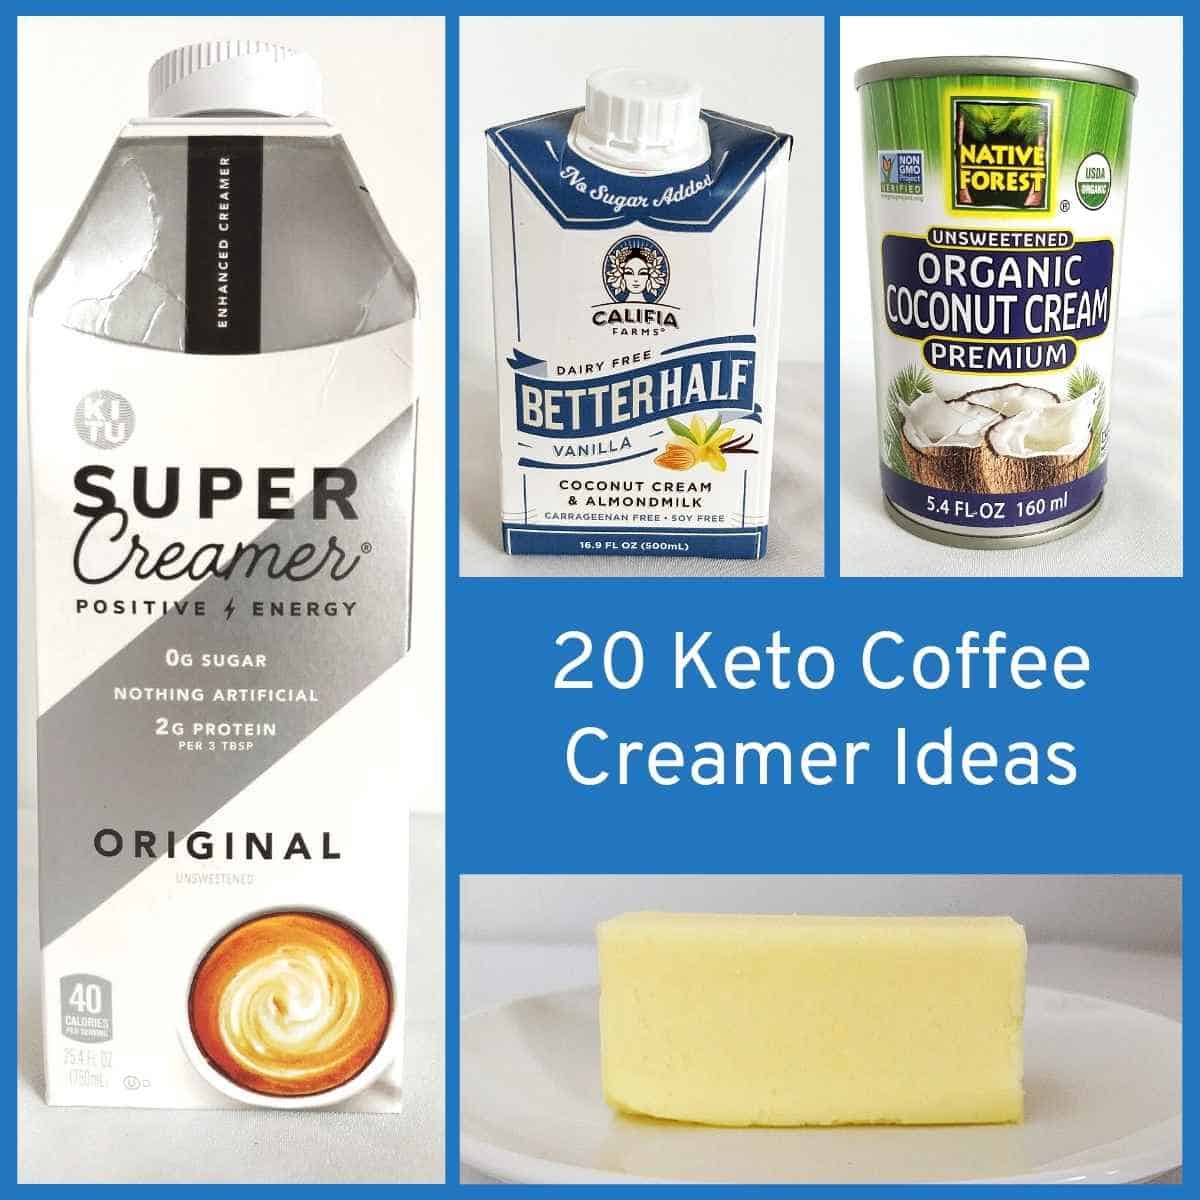 4 keto creamer ideas - The 20 Best Keto Coffee Creamer Ideas with 6 Recipes